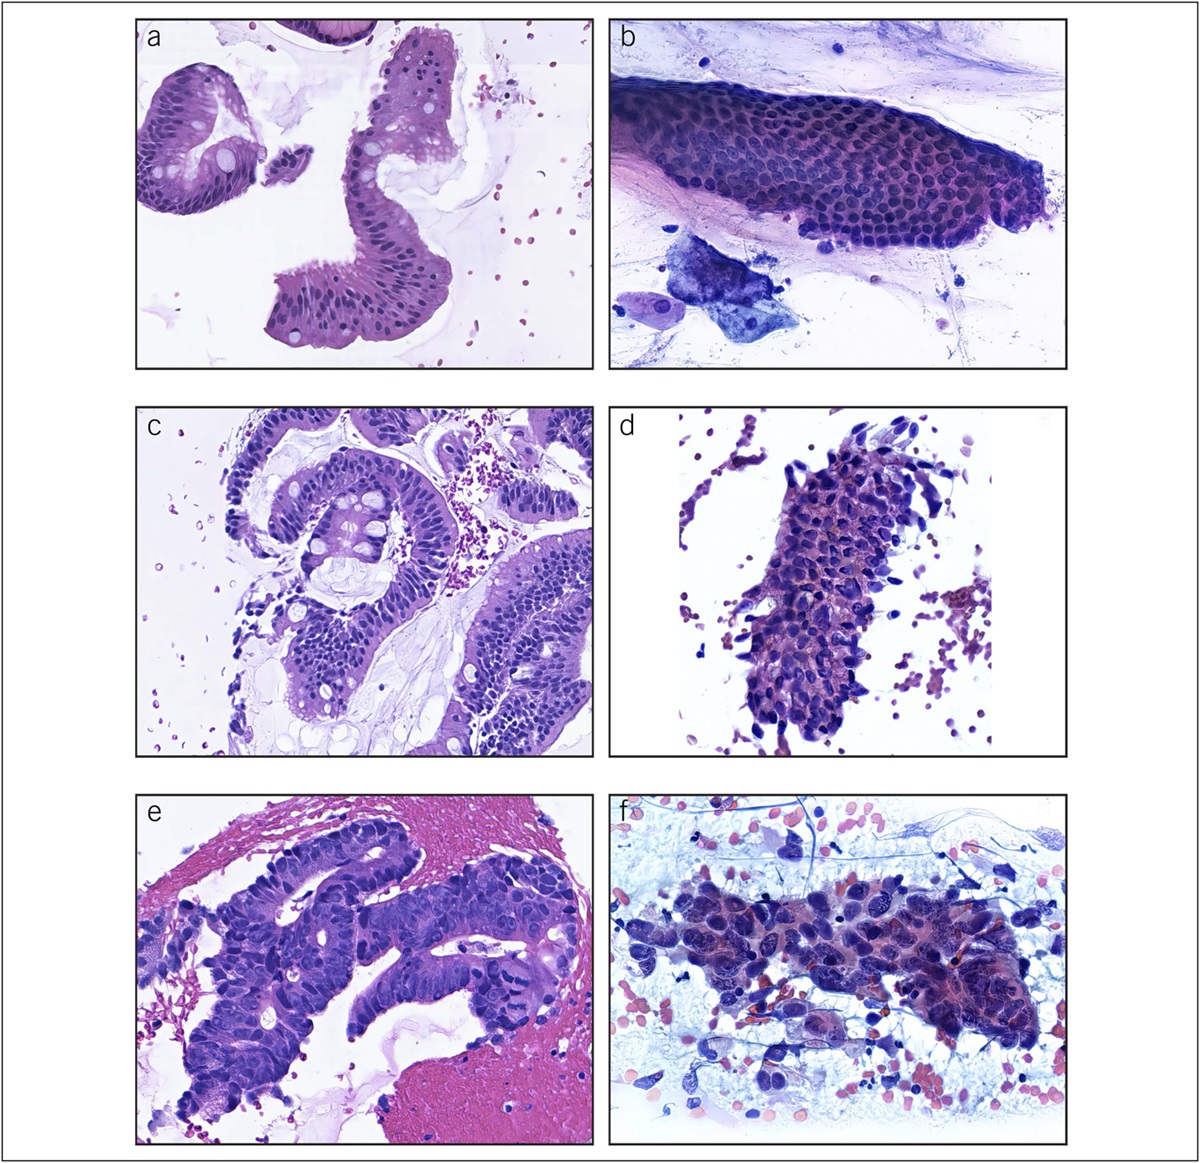 WATS3D: An Interobserver Study of Barrett's Esophagus–Associated Dysplasia Among Gastrointestinal Pathologists